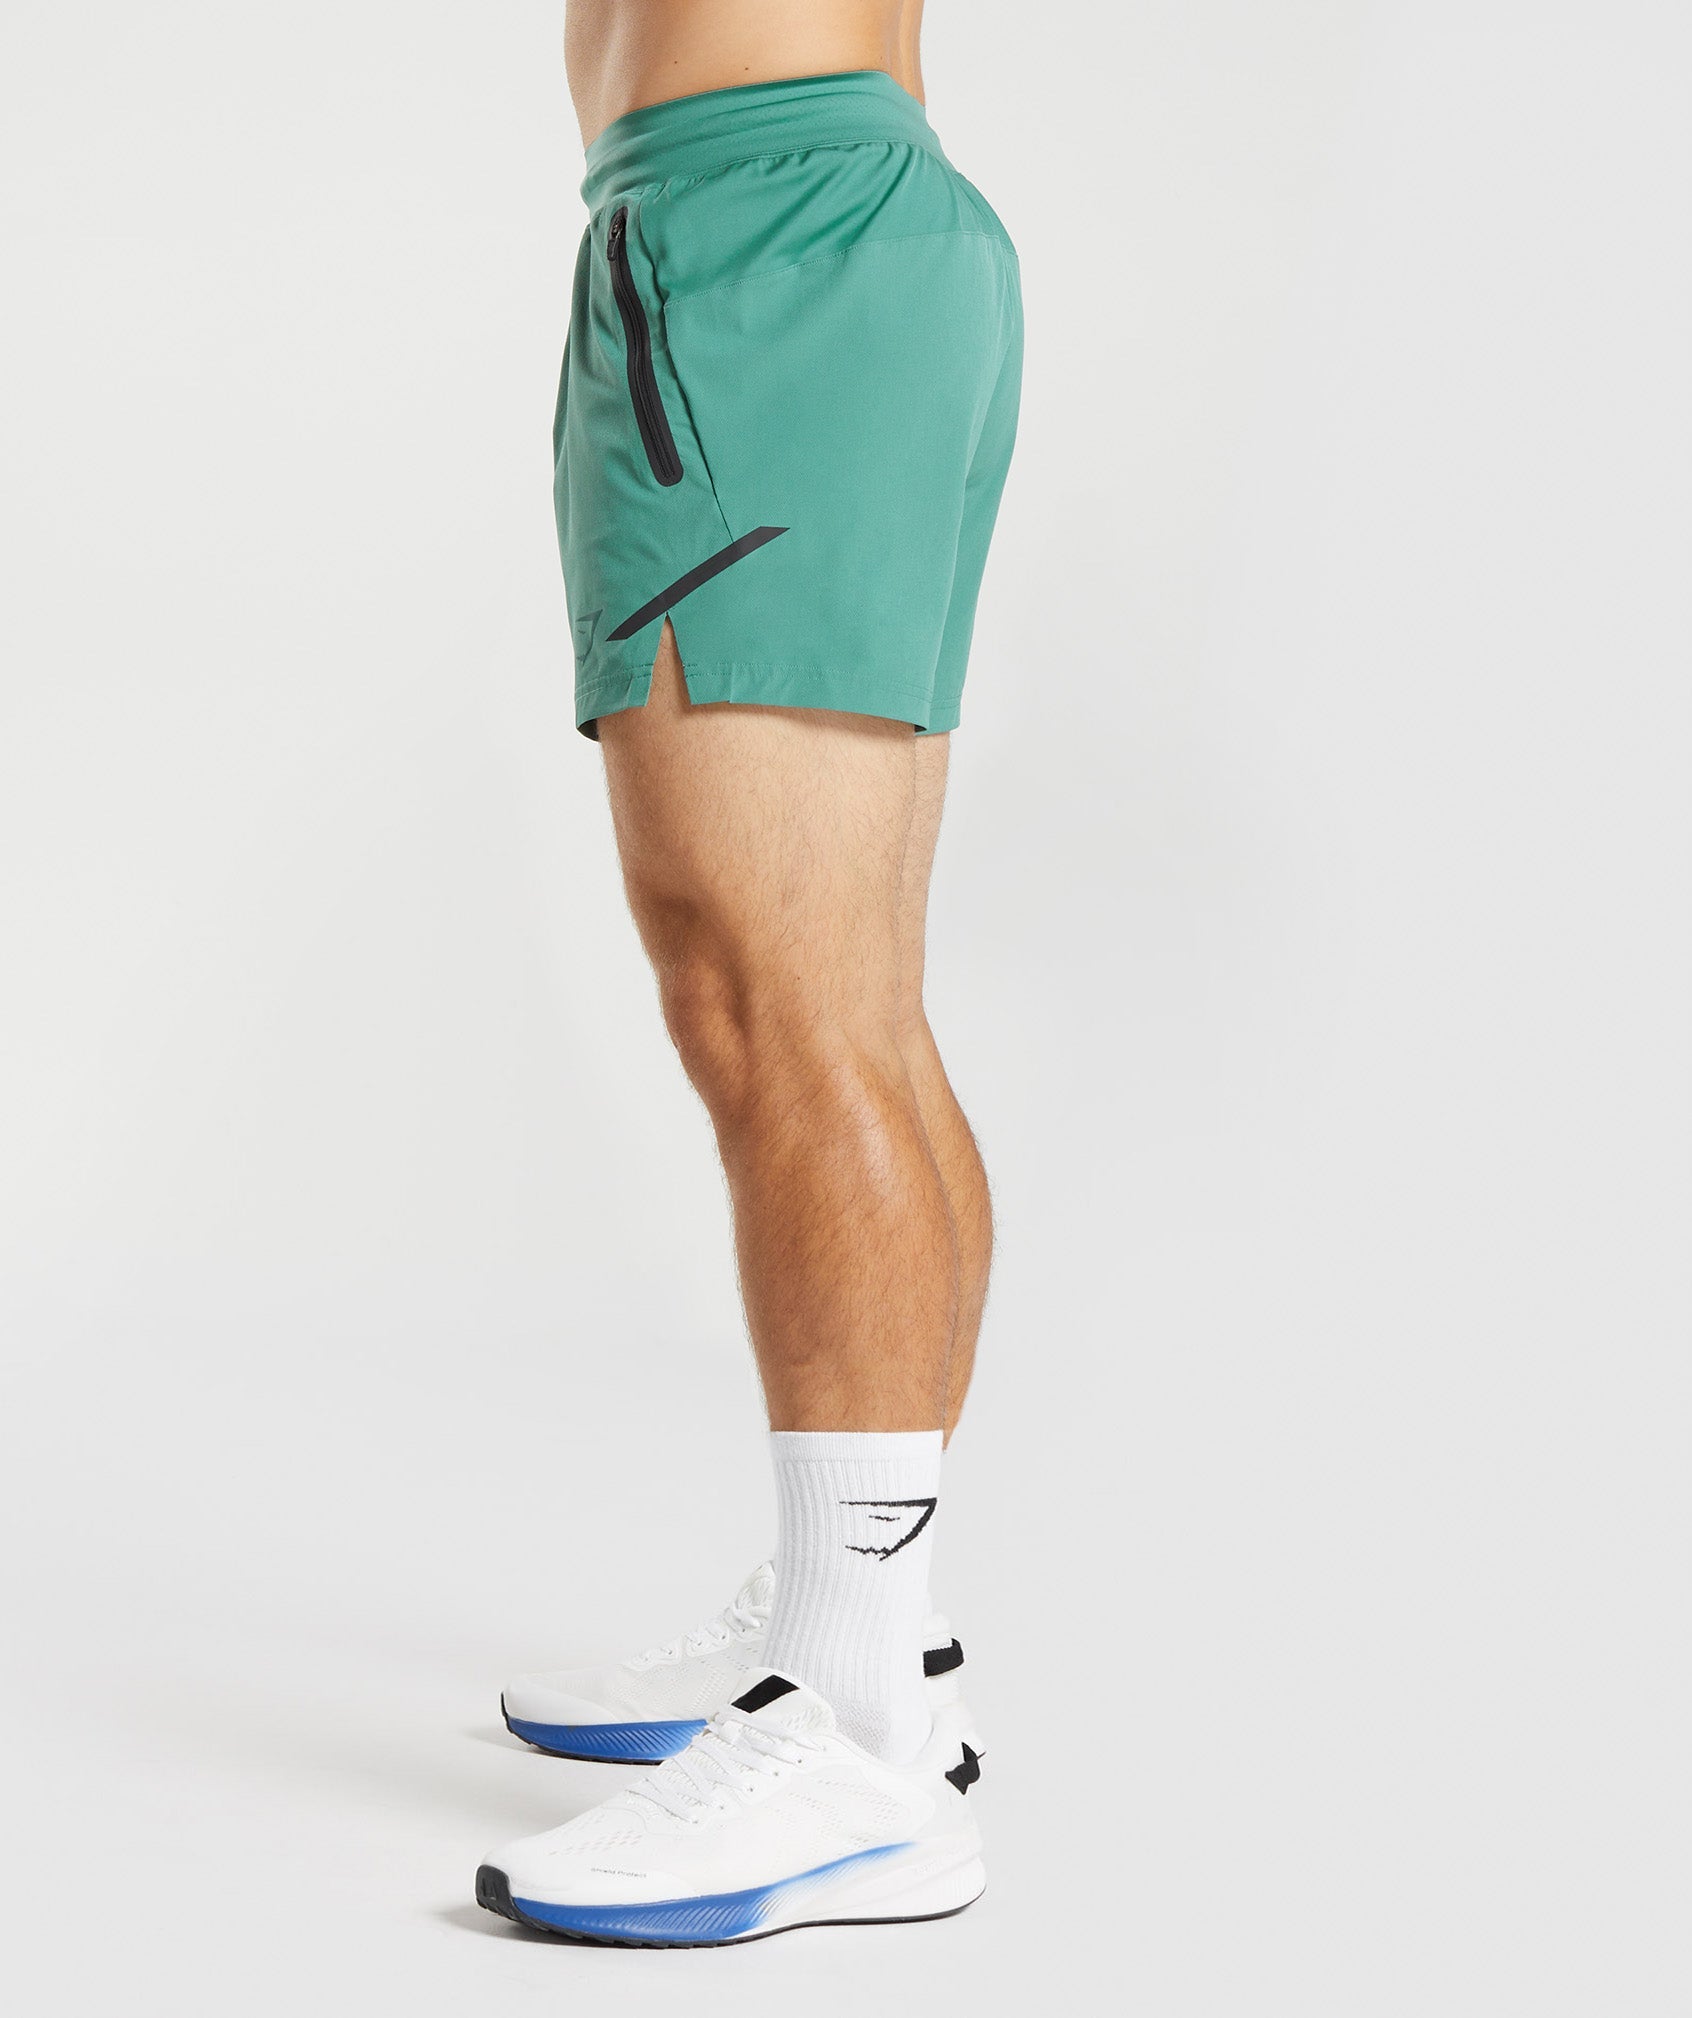 Gymshark NWOT Apex Seamless High Performance Lightweight Green Shorts Small  - $26 - From Trisha